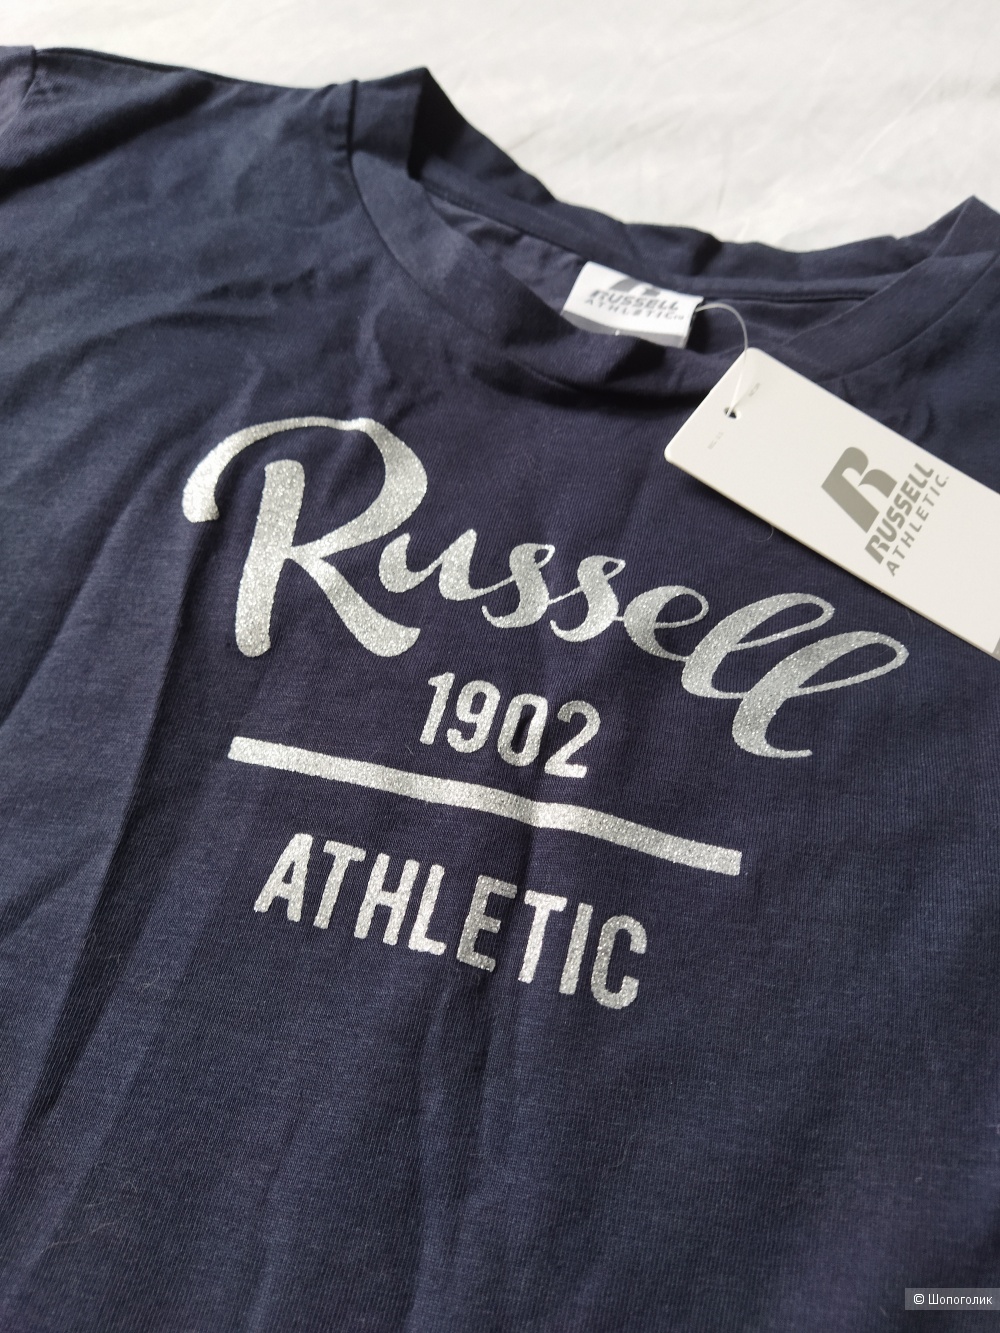 Топ футболка Russell Athletic р.46-50